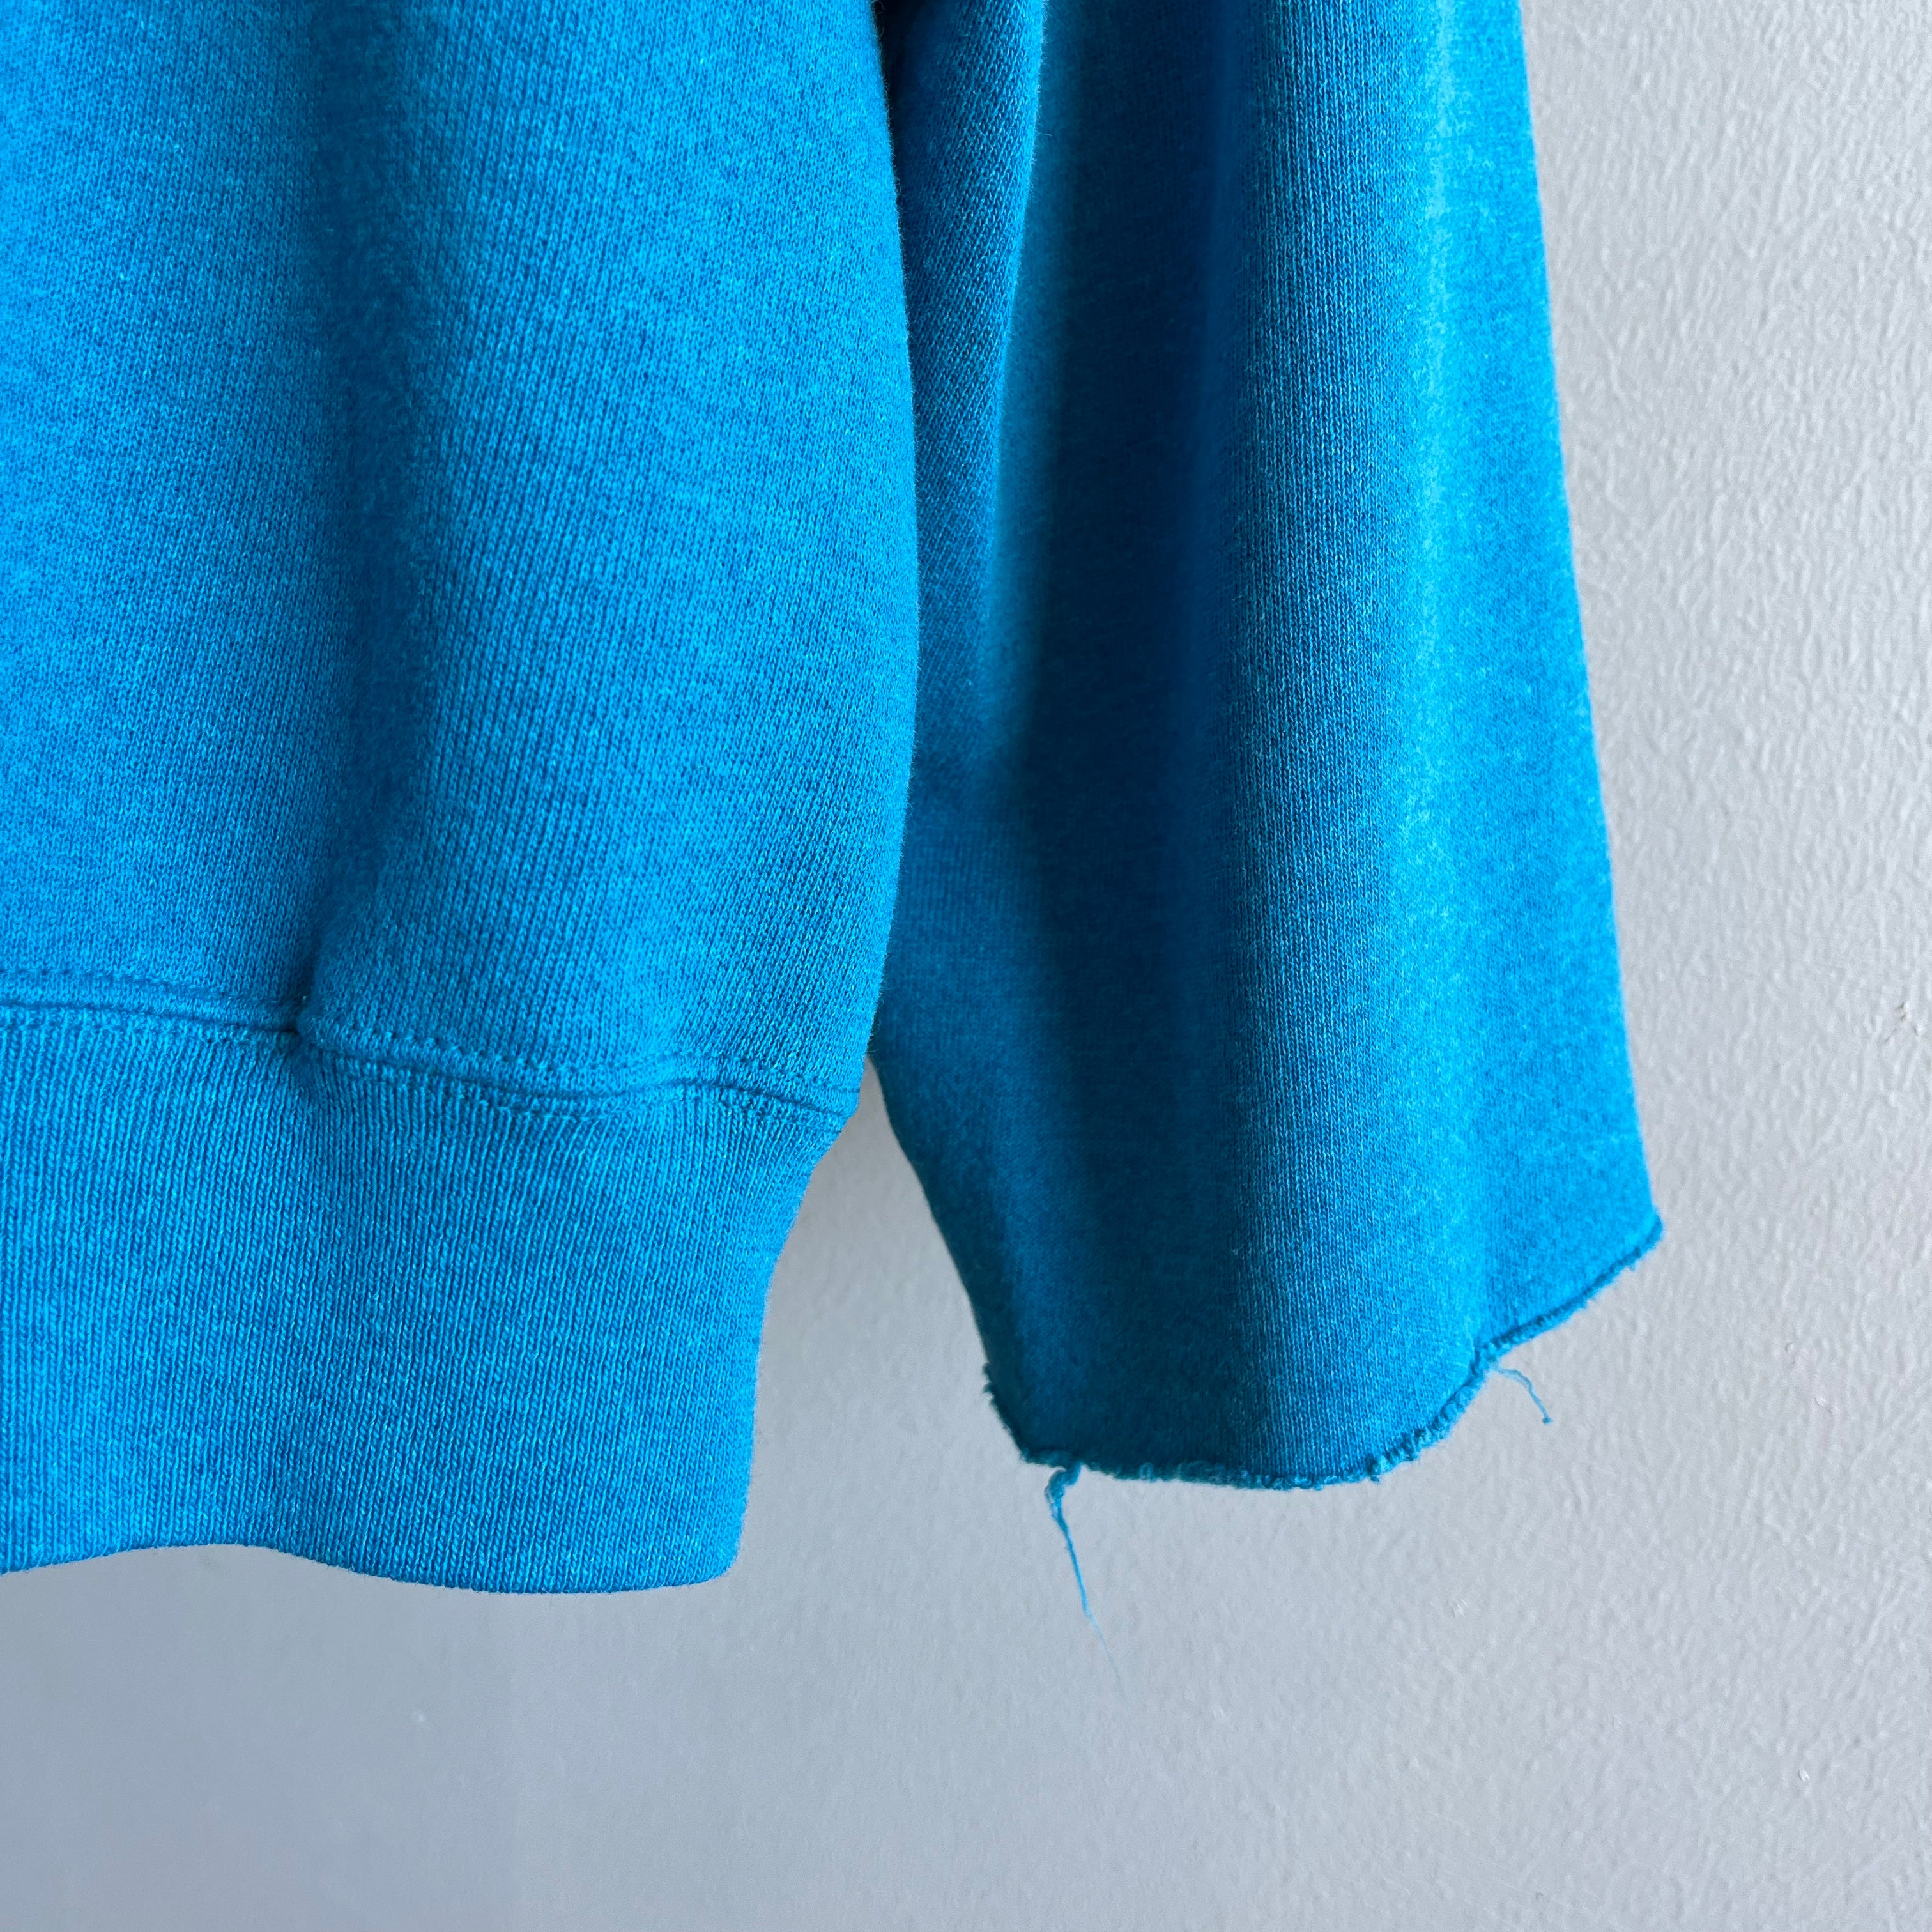 1980s Super Cool Blue Sweatshirt Perfect for a Broken Left Arm